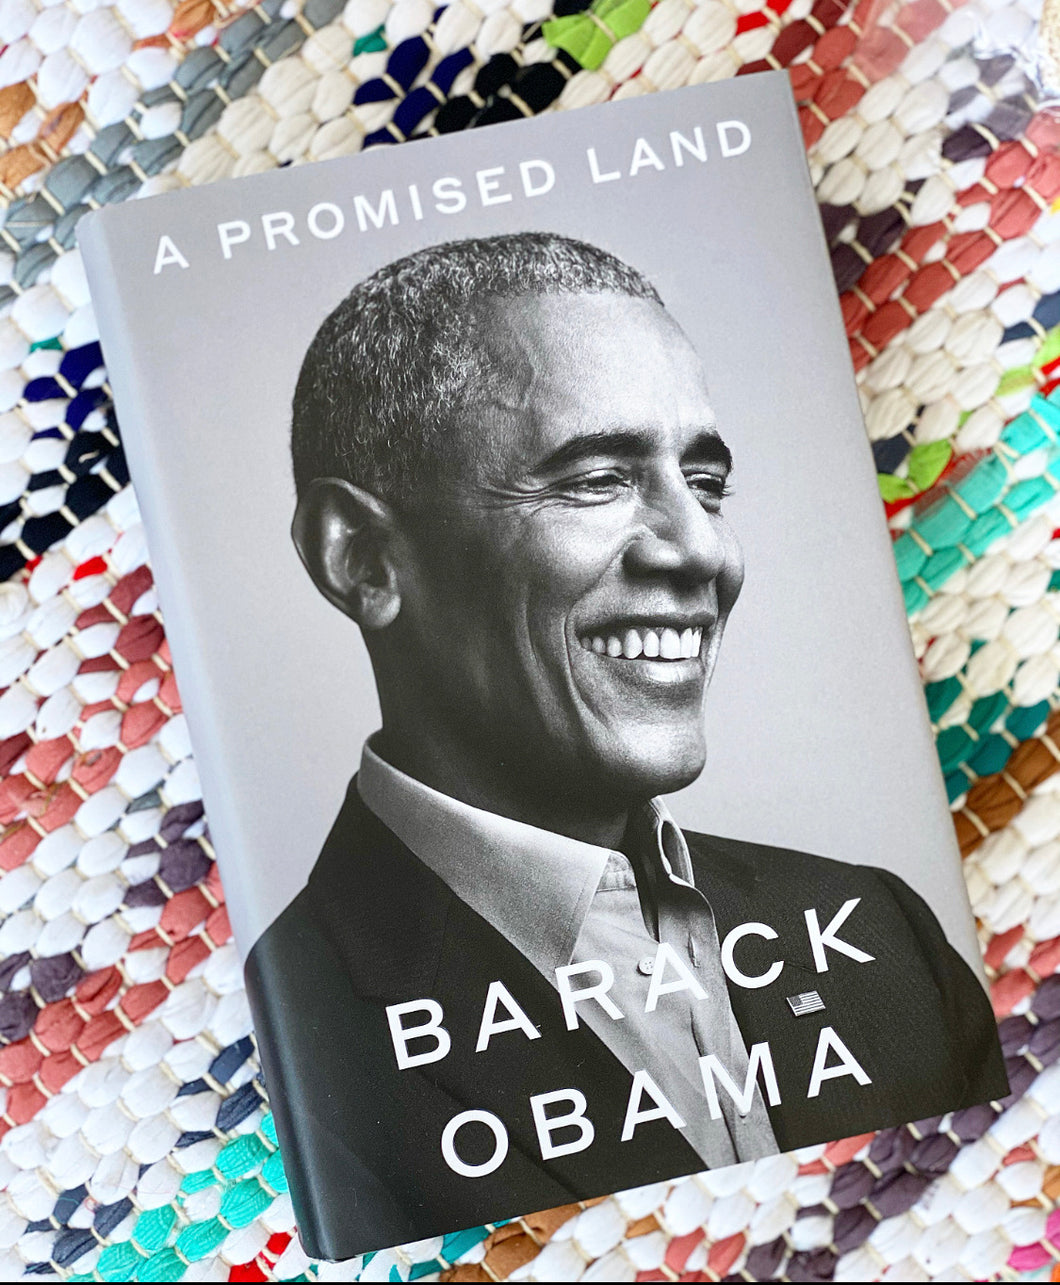 A Promised Land | Barack Obama